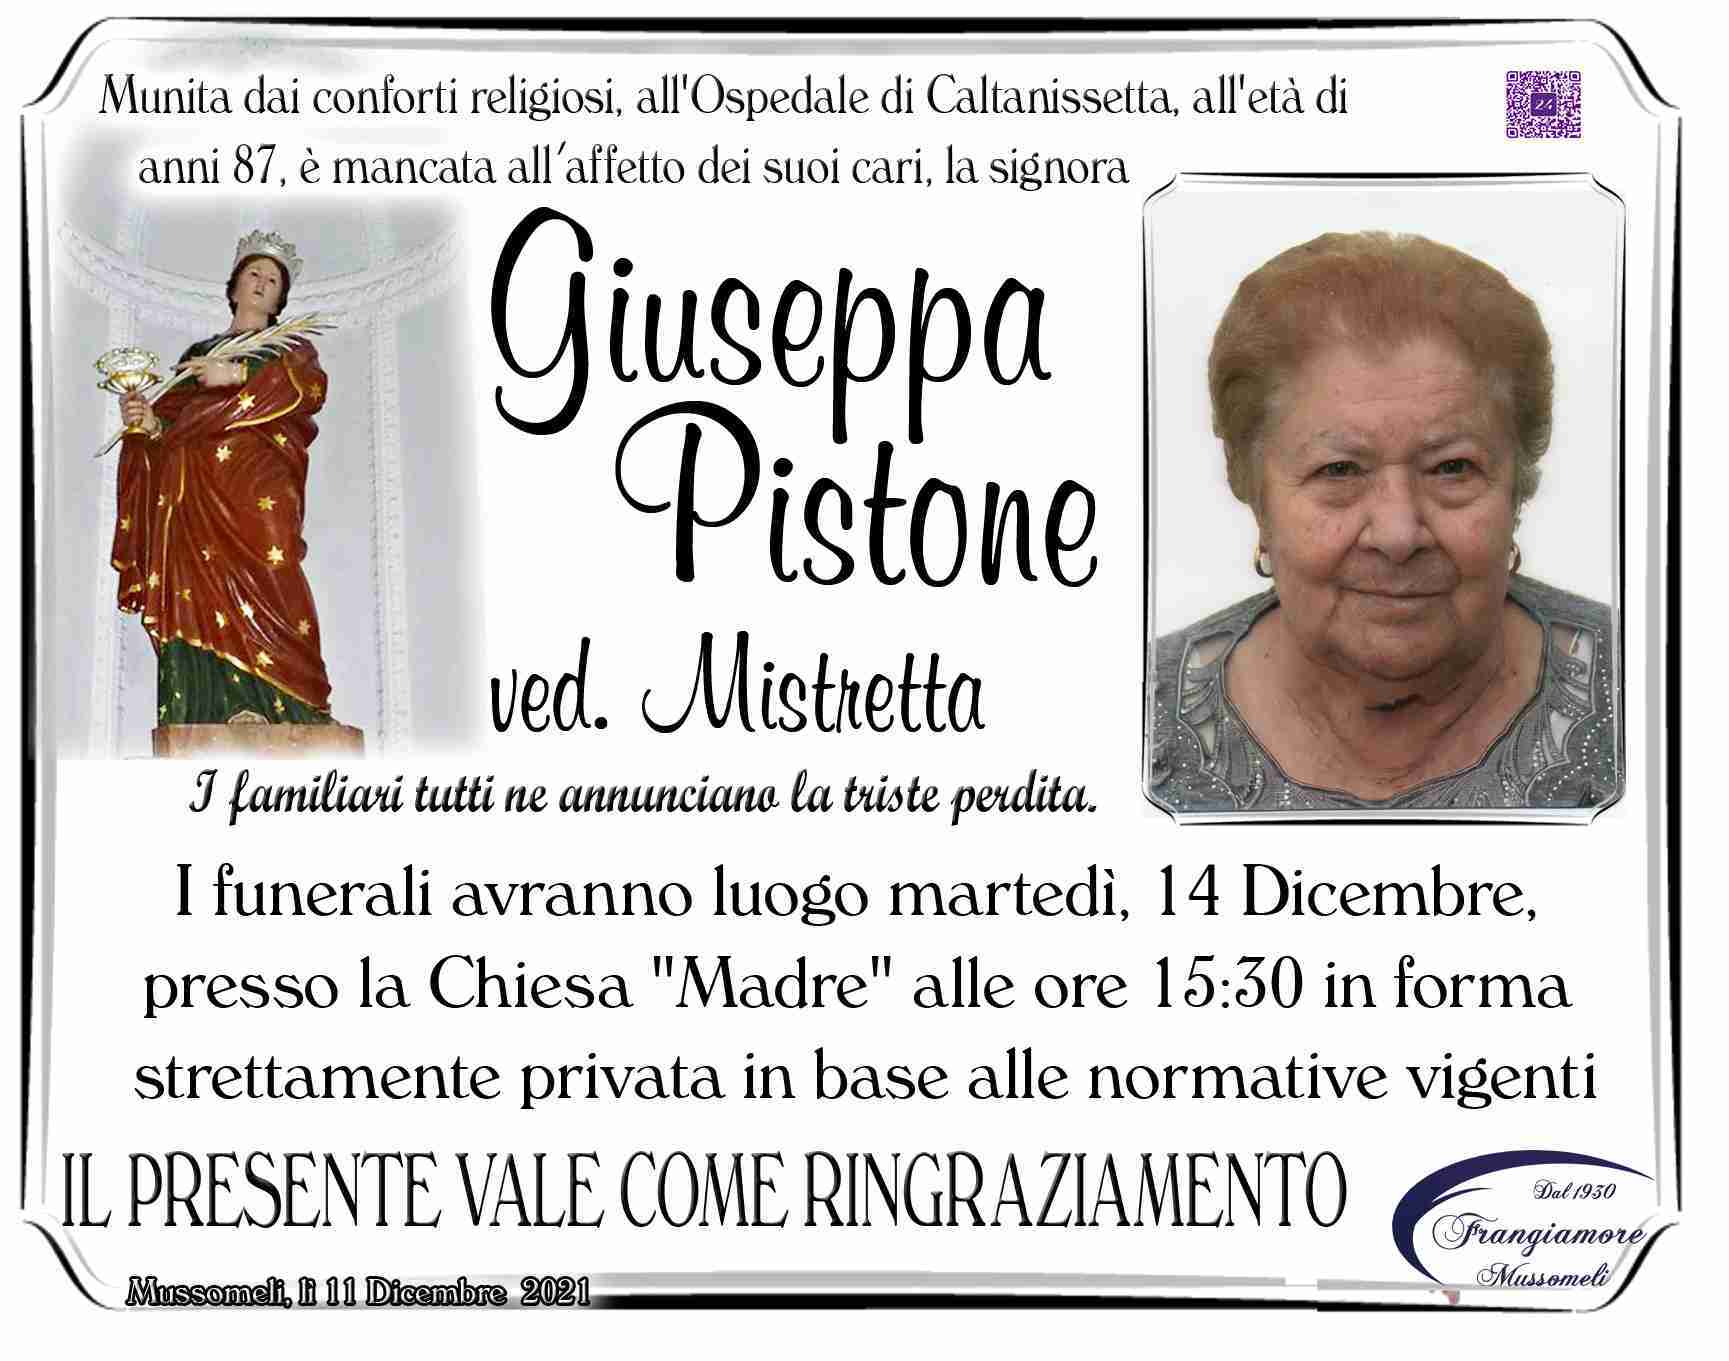 Giuseppa Pistone